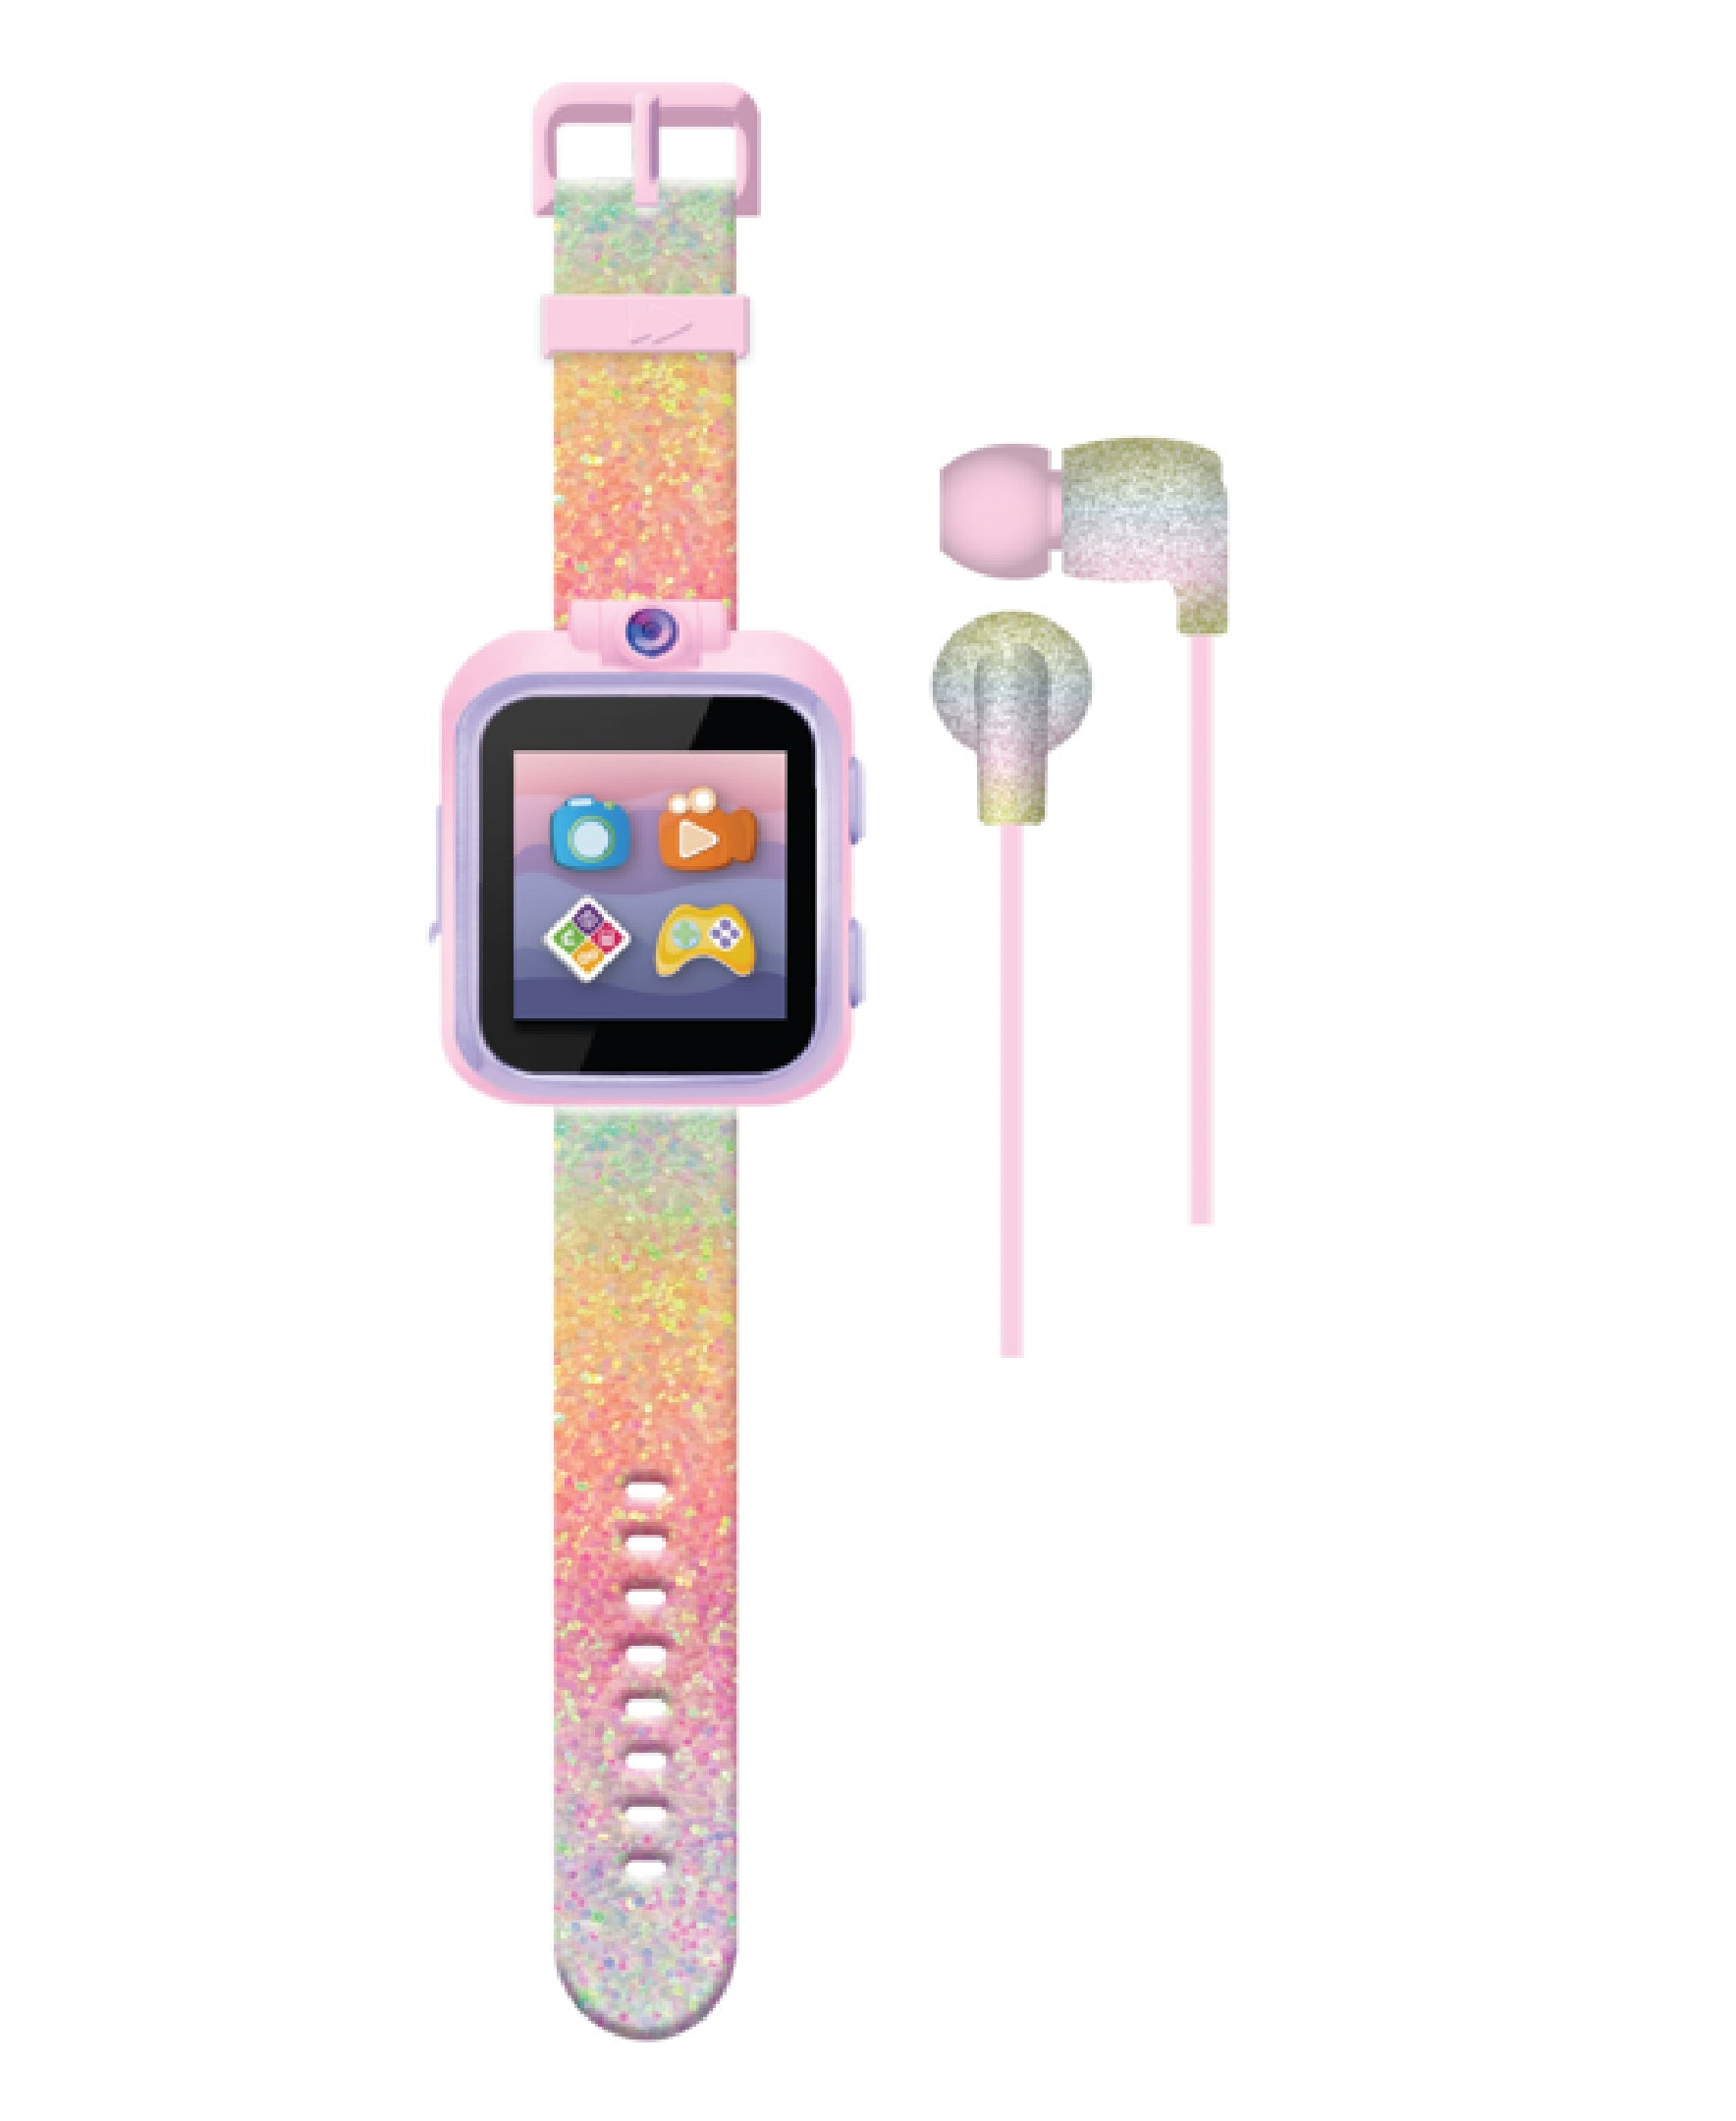 Playzoom 2 Kids Smartwatch & Earbuds Set: Textured Rainbow Glitter